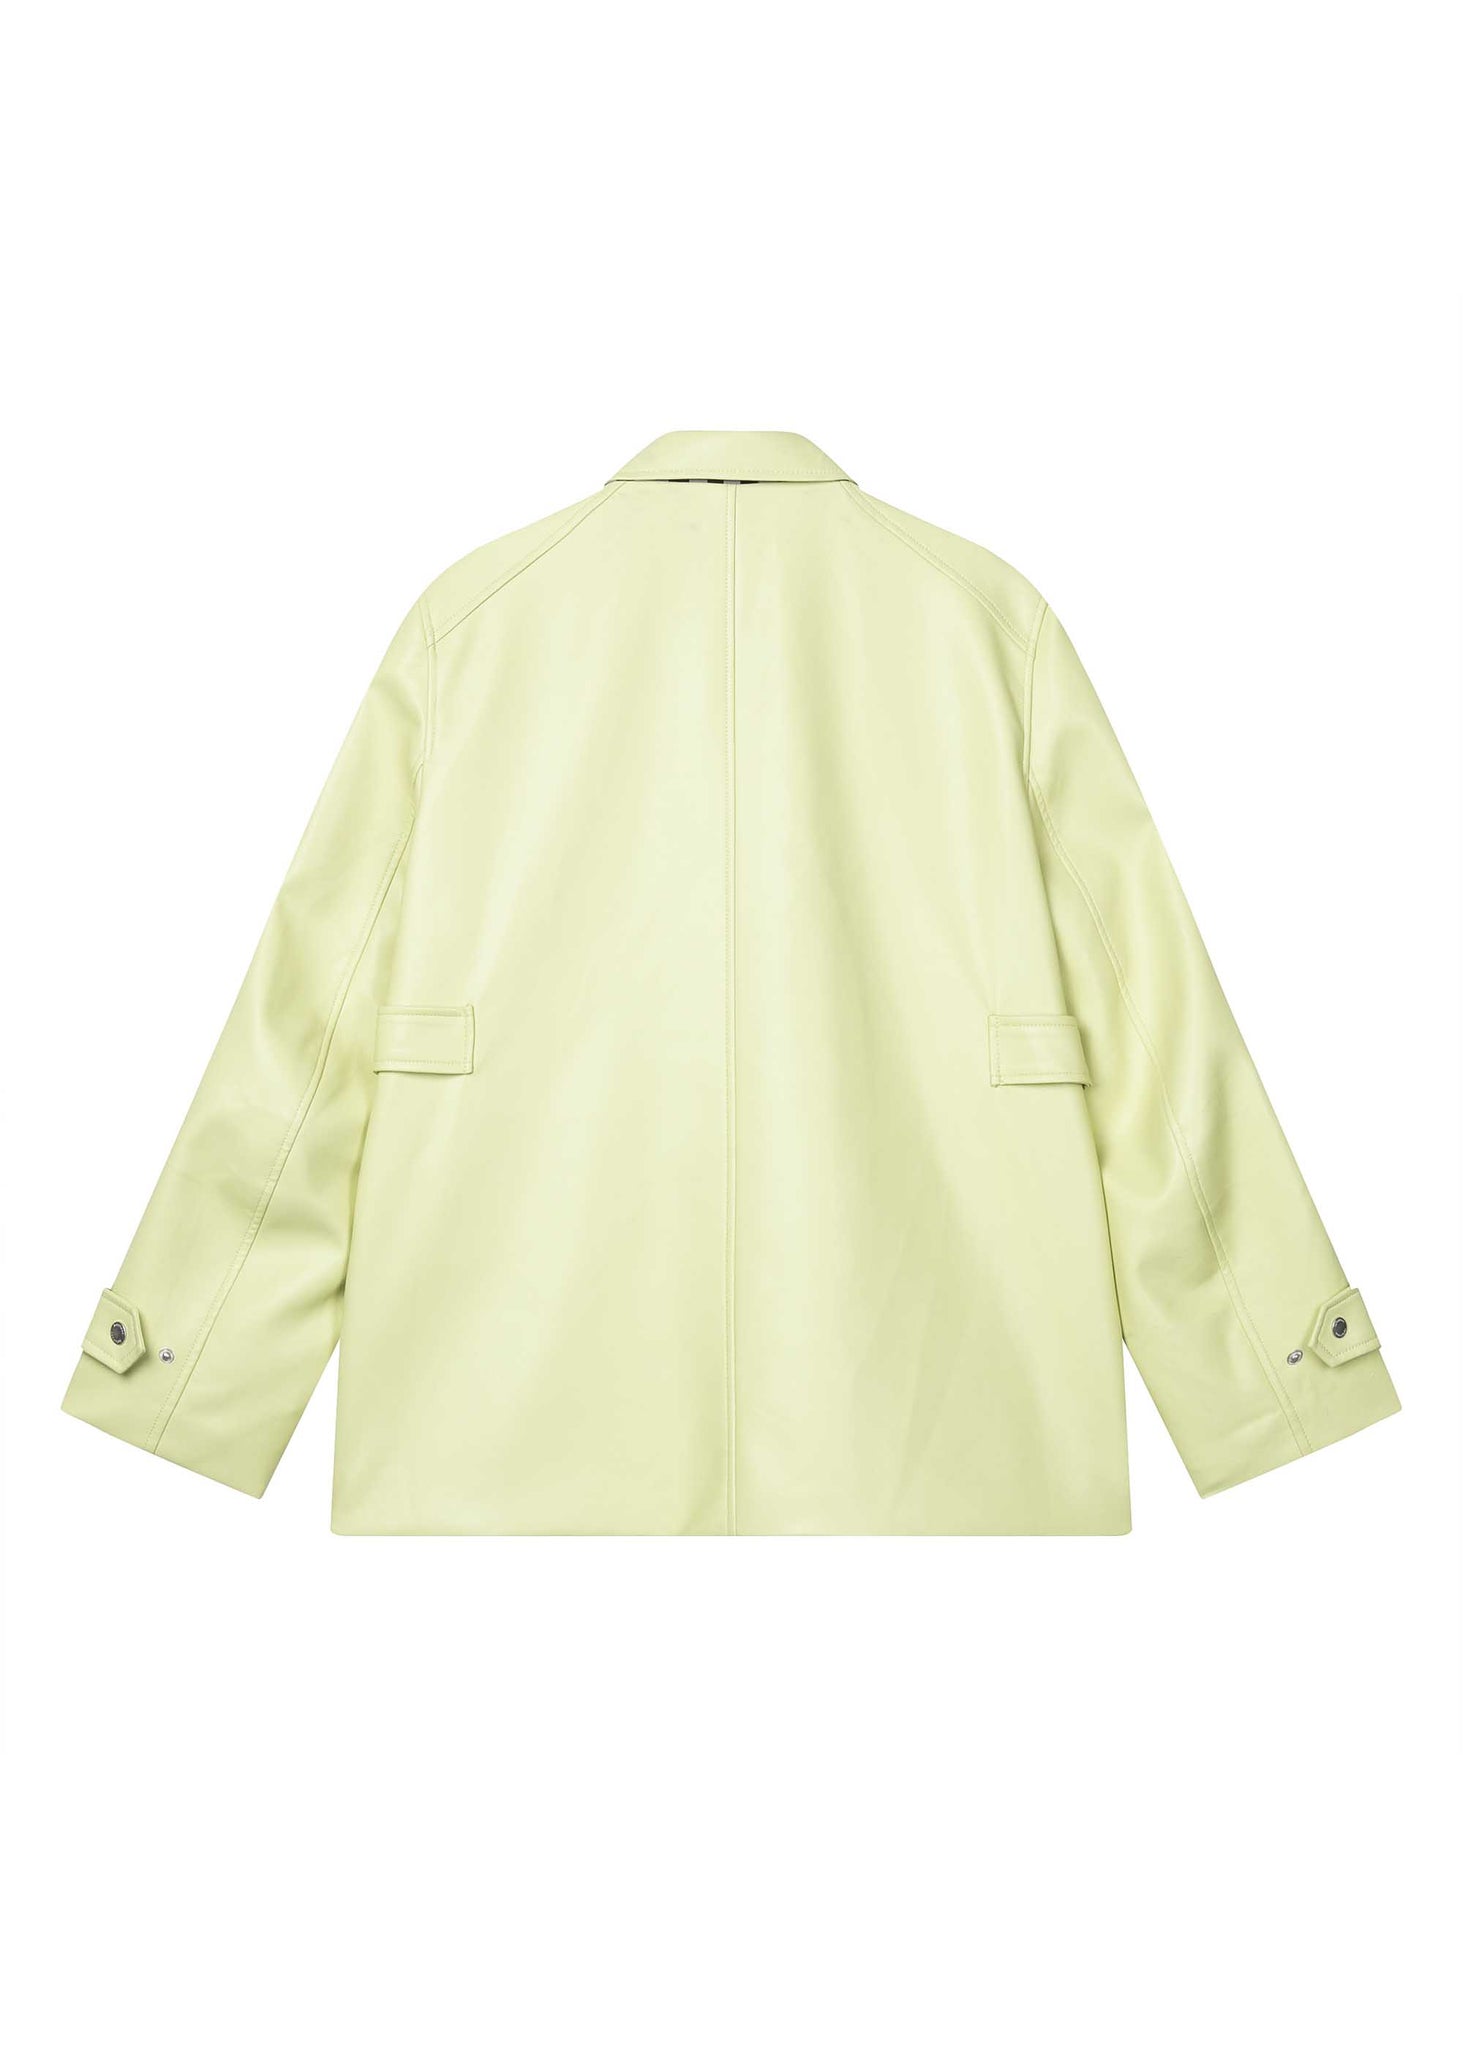 Lime Green Chore Jacket